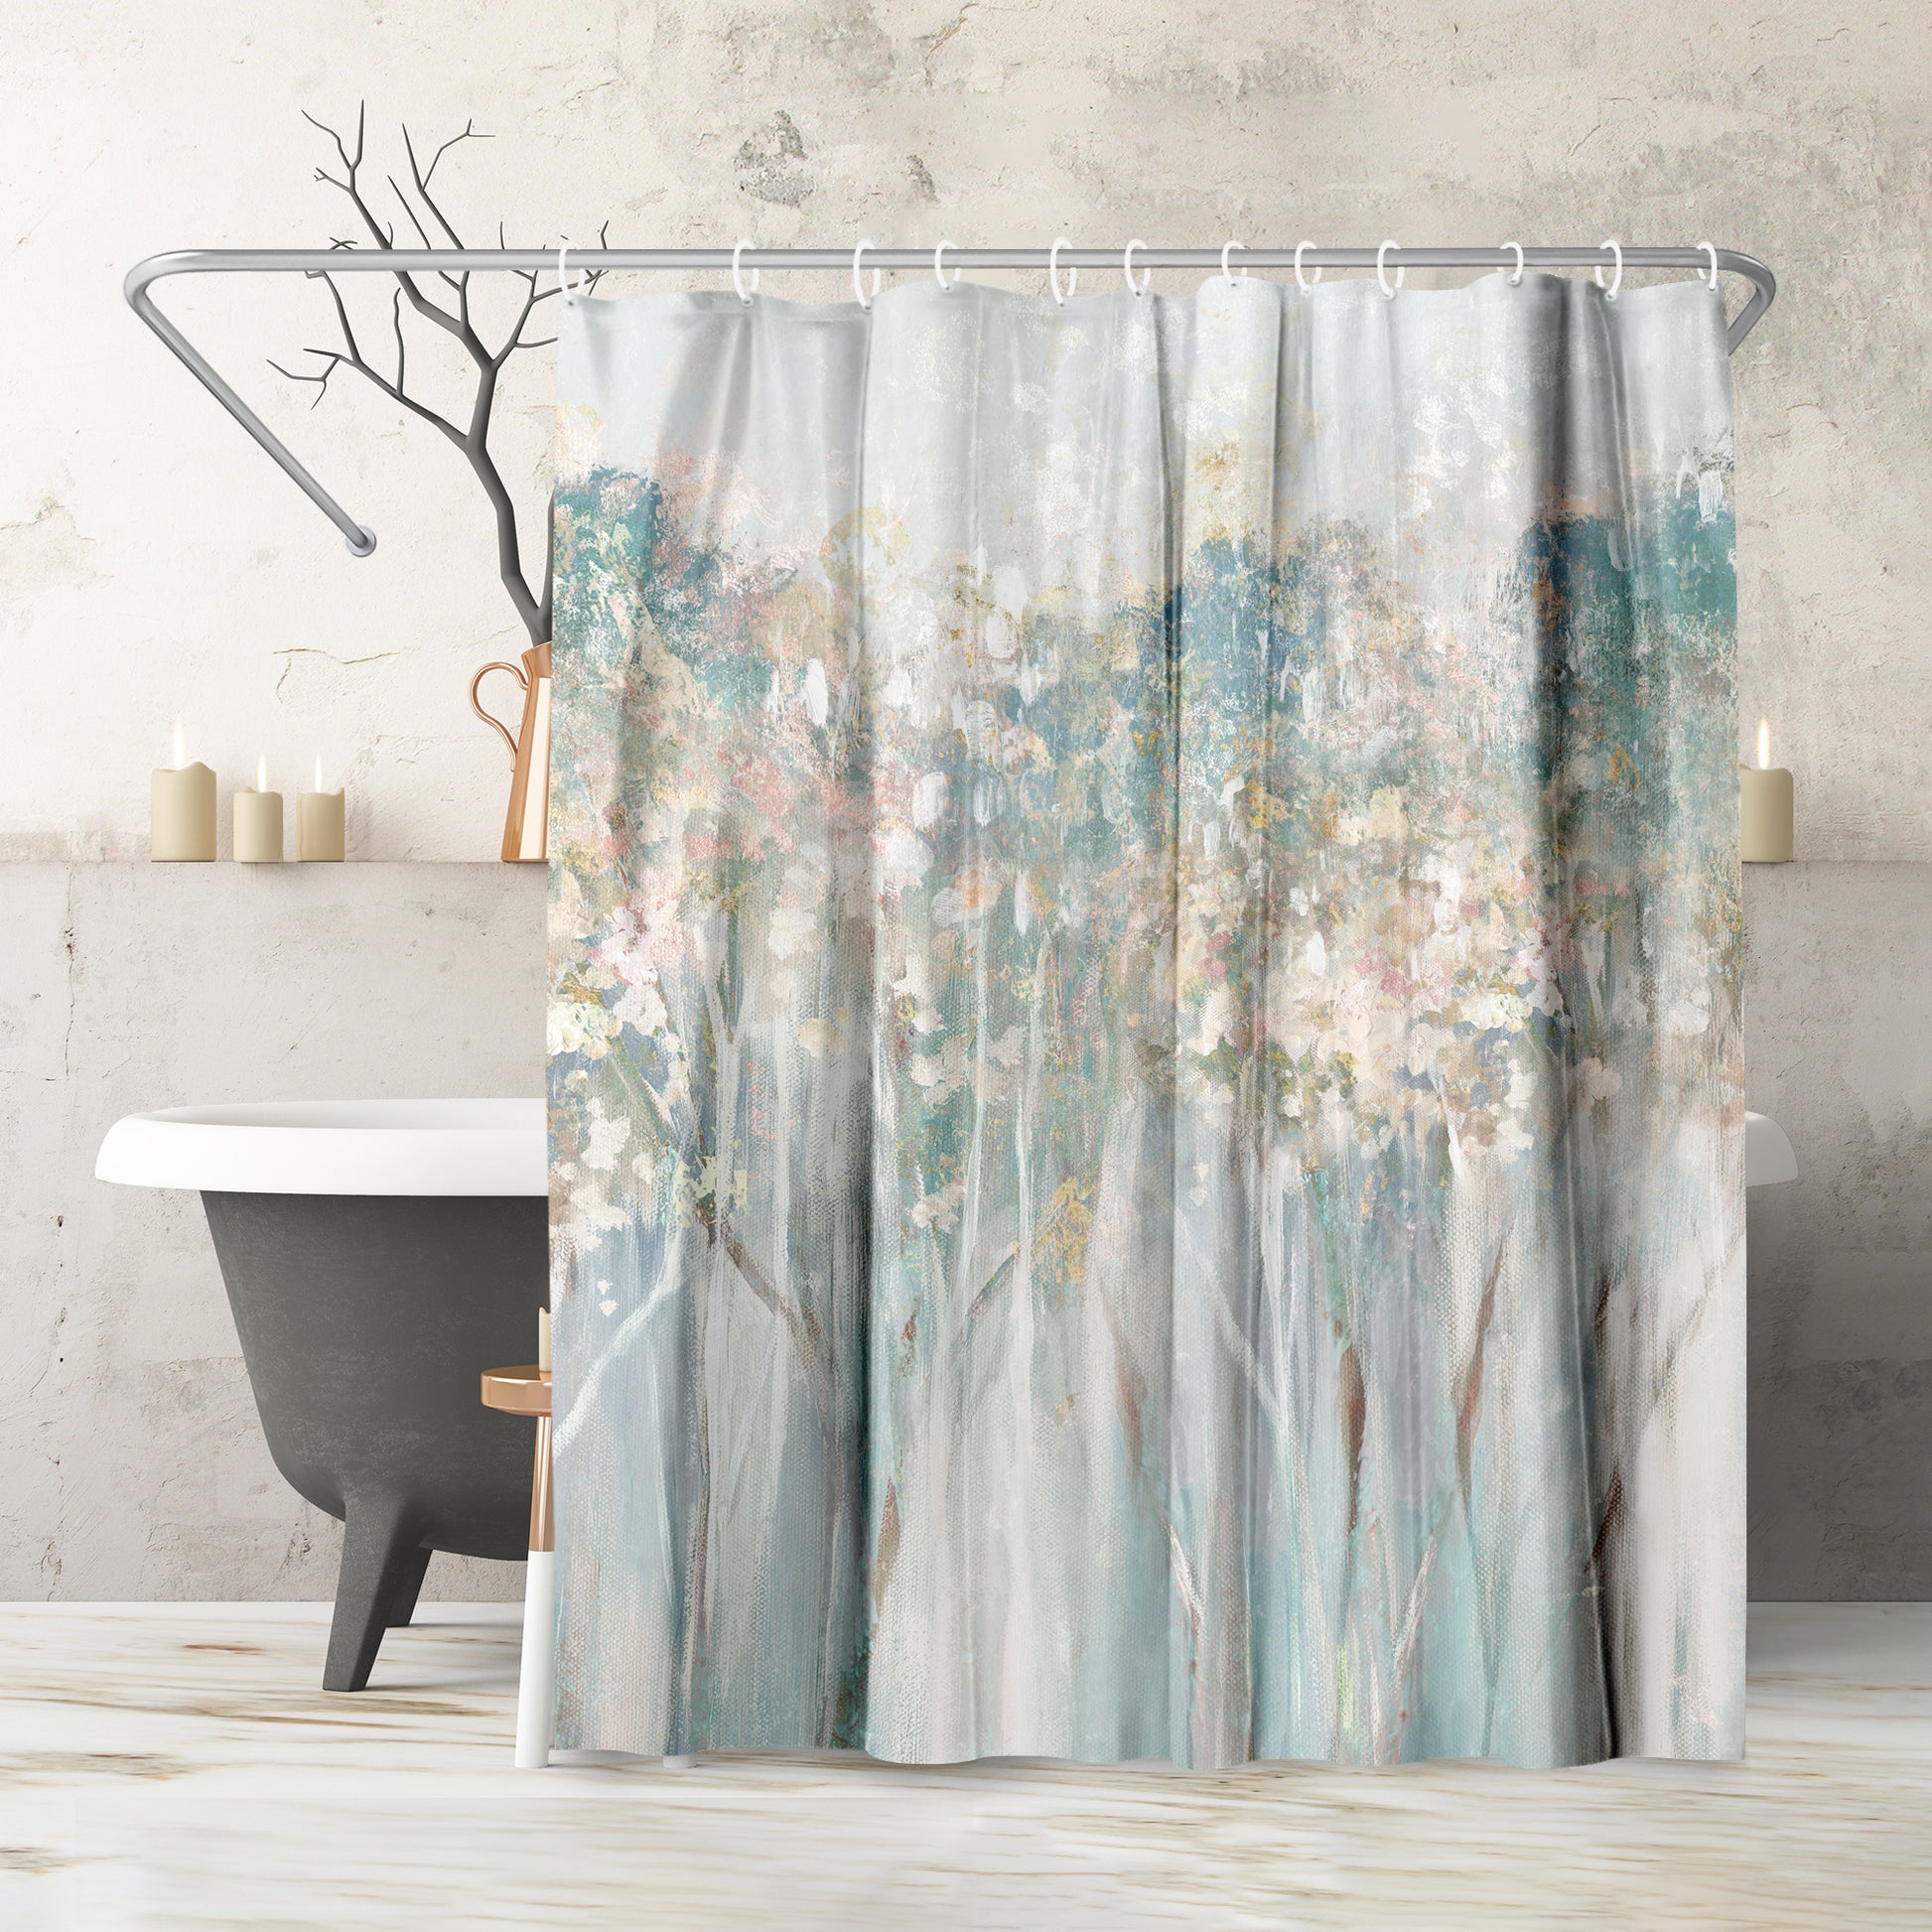 Water Ballet Koi Shower Curtain – Brazen Design Studio